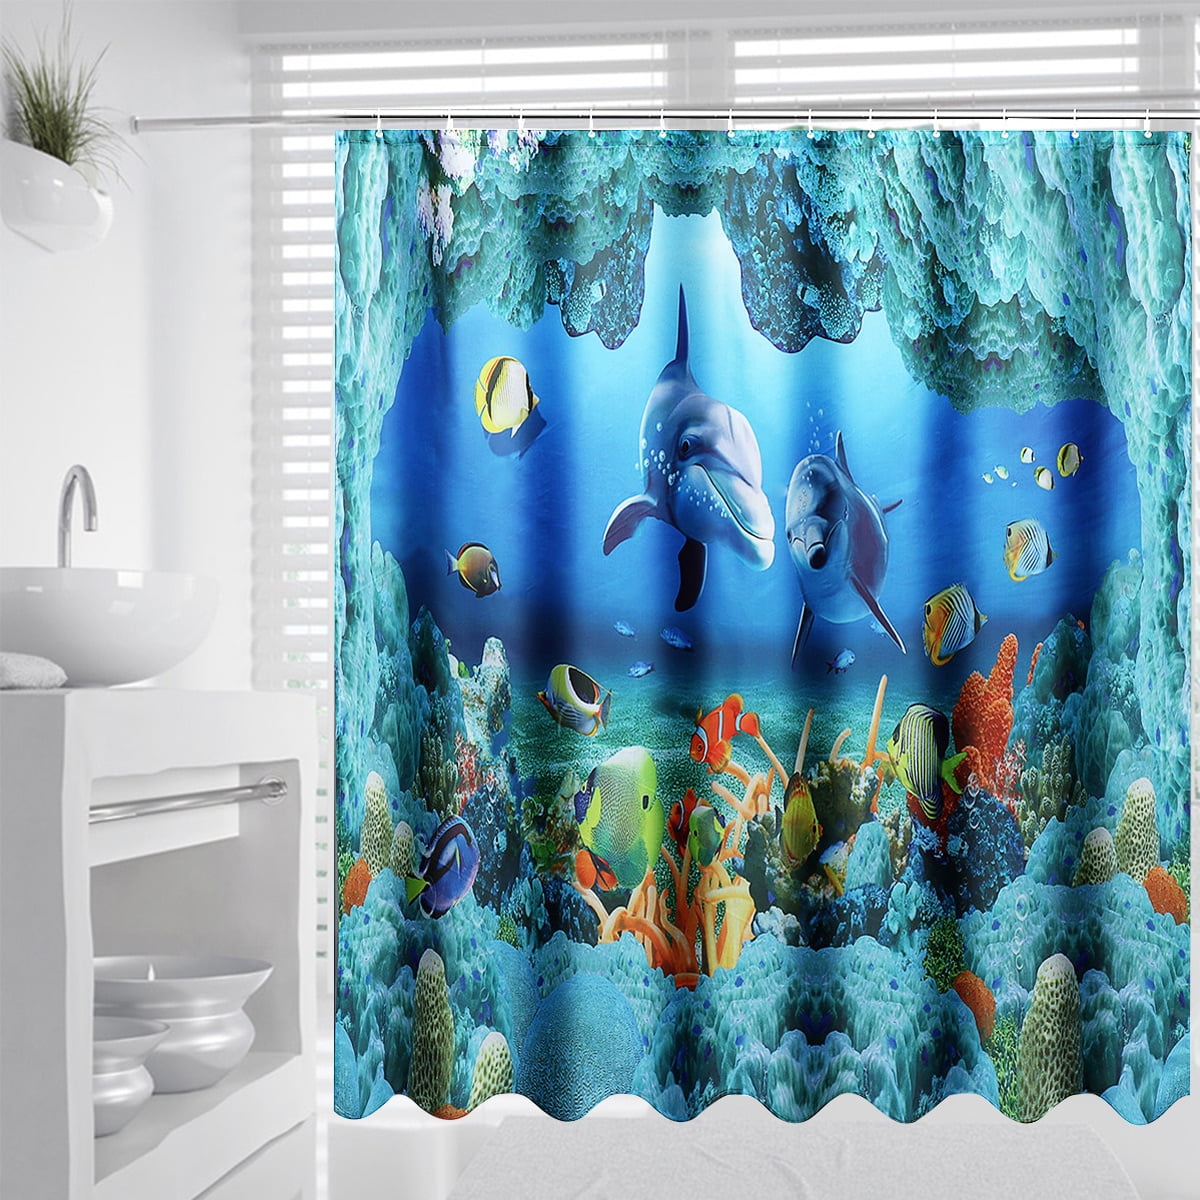 Pirate flag Bathroom Decor Shower Curtain Waterproof Fabric w/12 Hook 71*71inch 